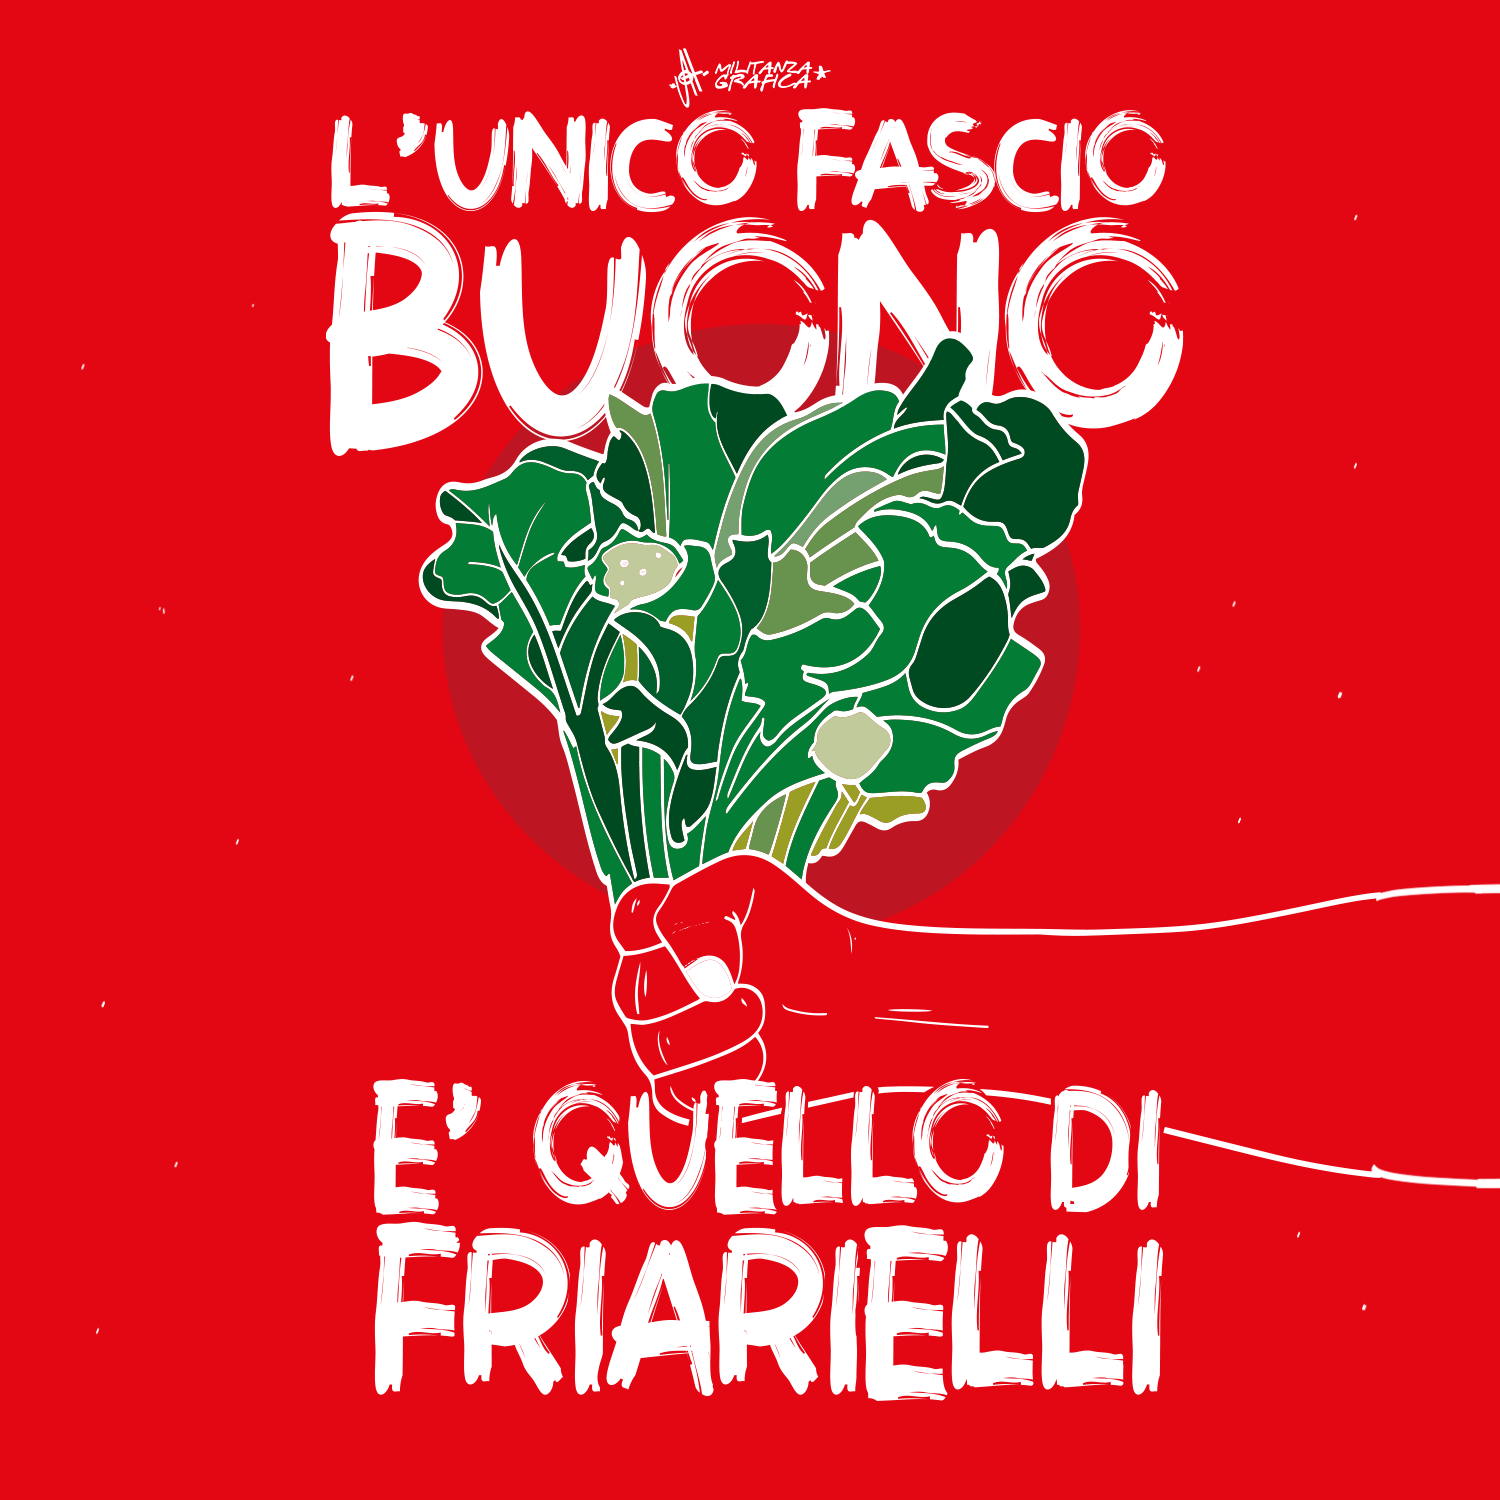 Friarielli Fascio